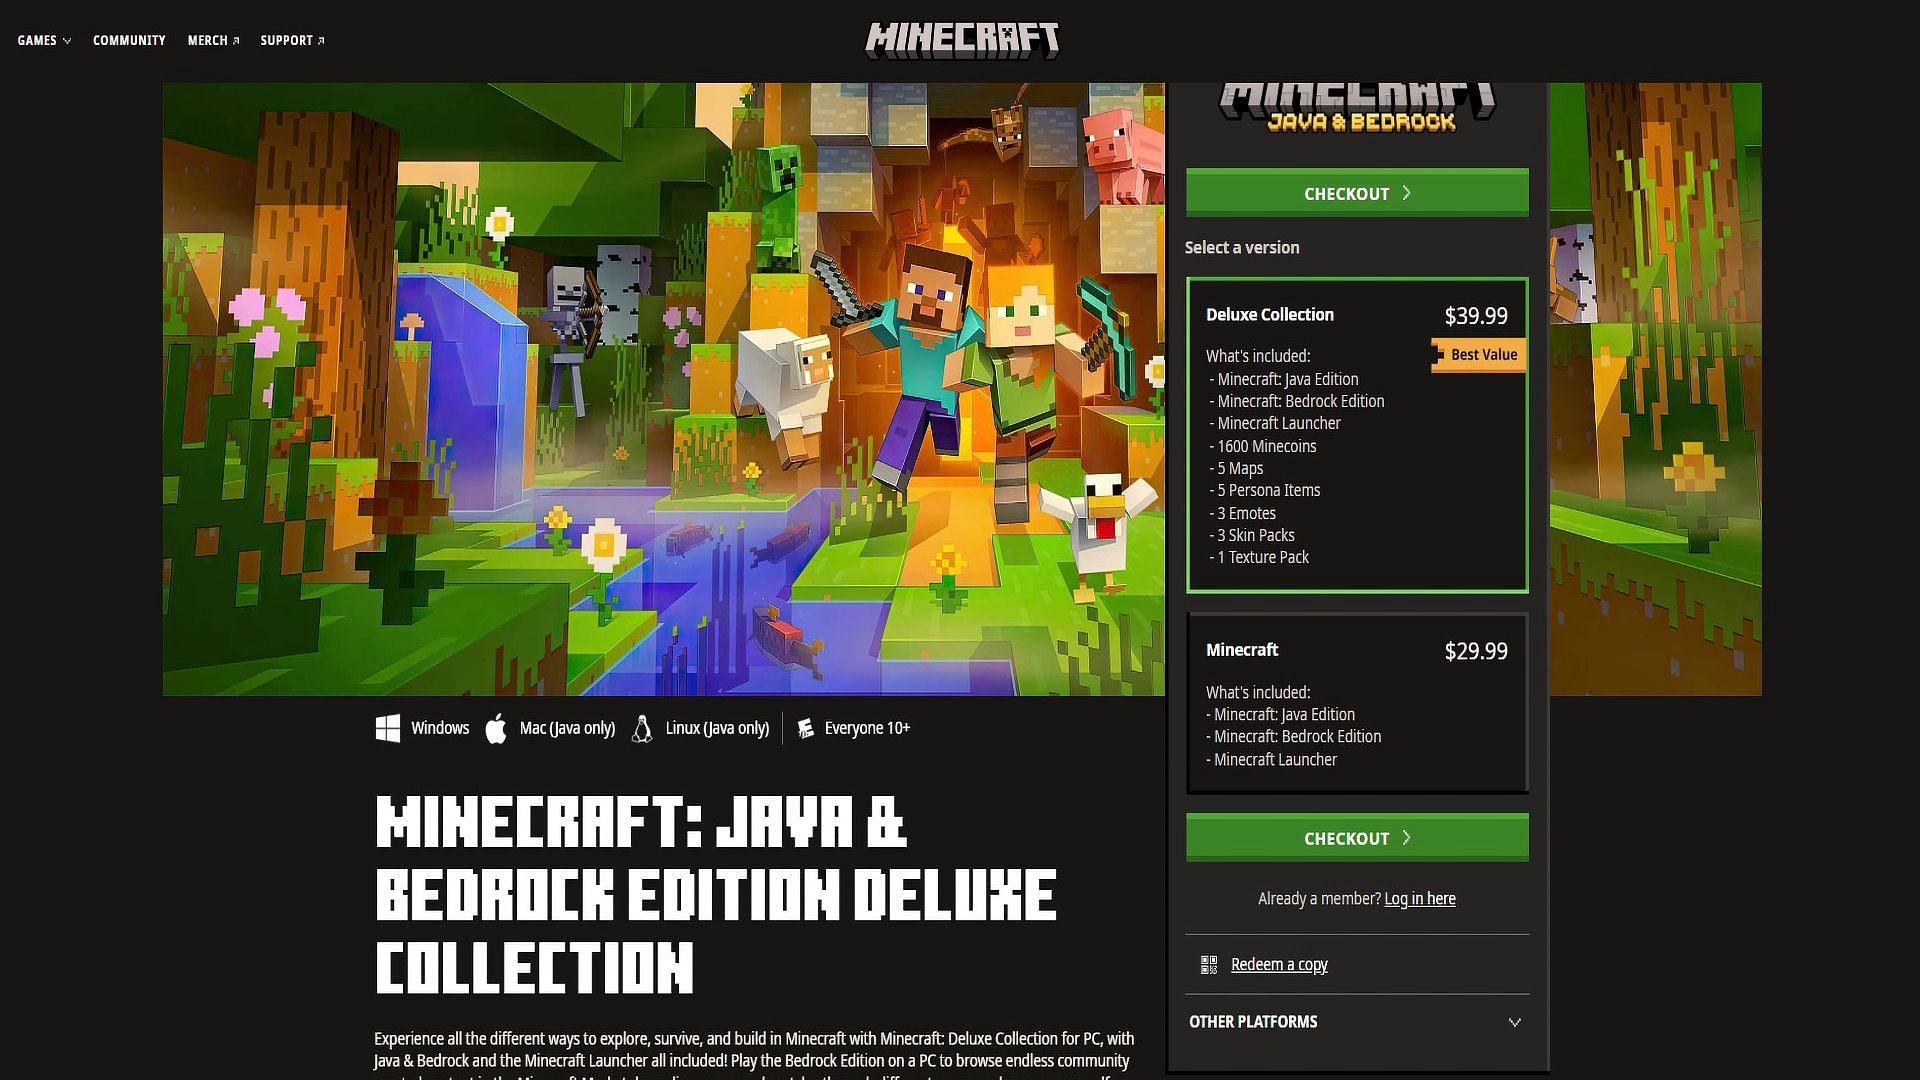 Download Minecraft Java and Bedrock versions on Windows. (Image via Minecraft.net)